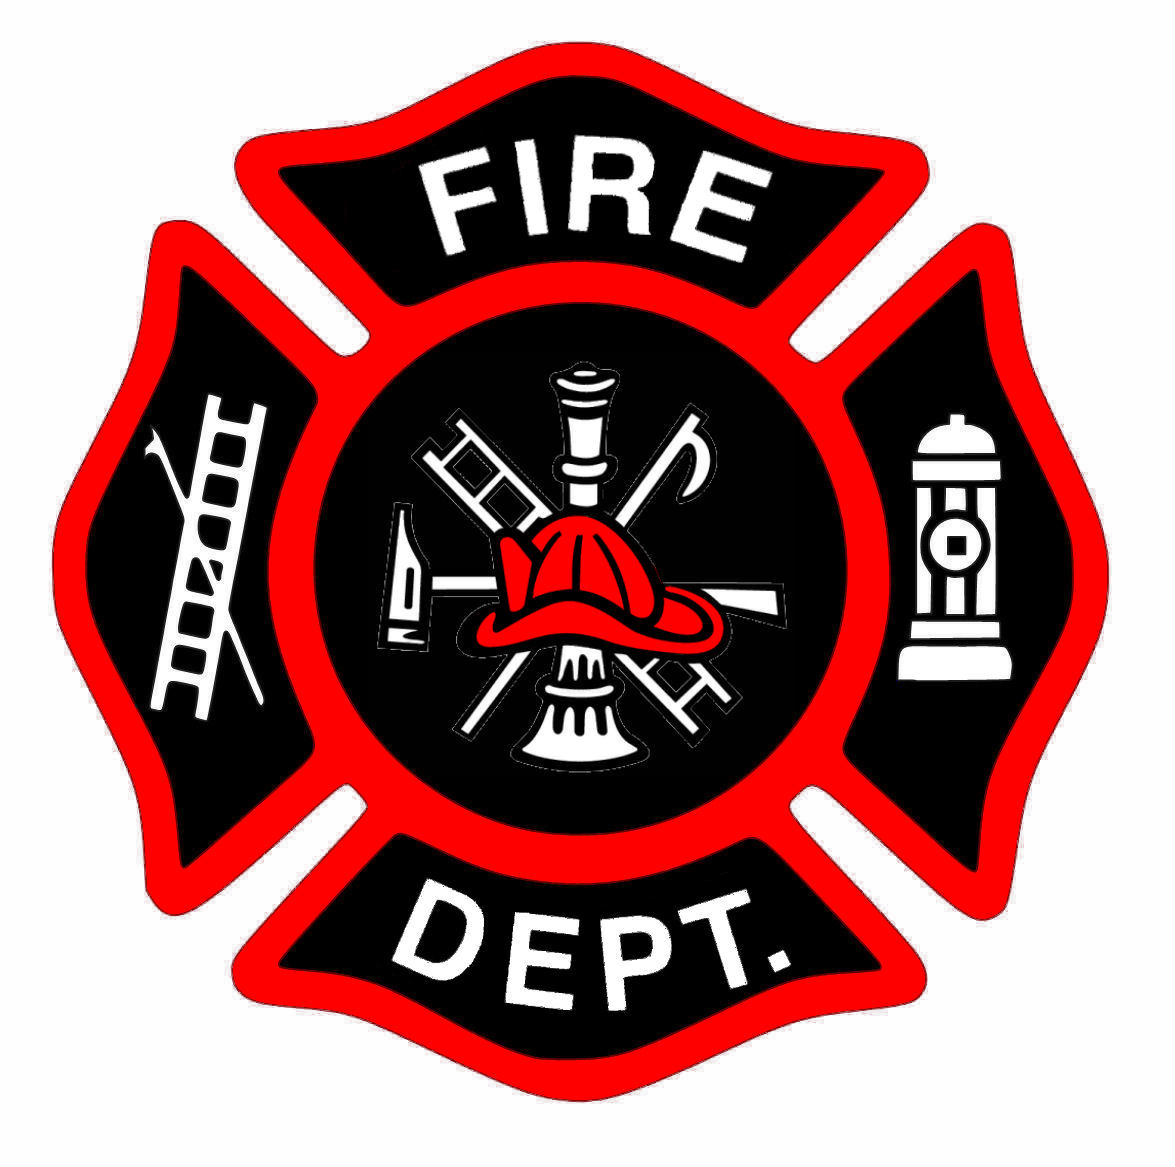 Firefighter Fireman Emblem Kid Free Download Clipart